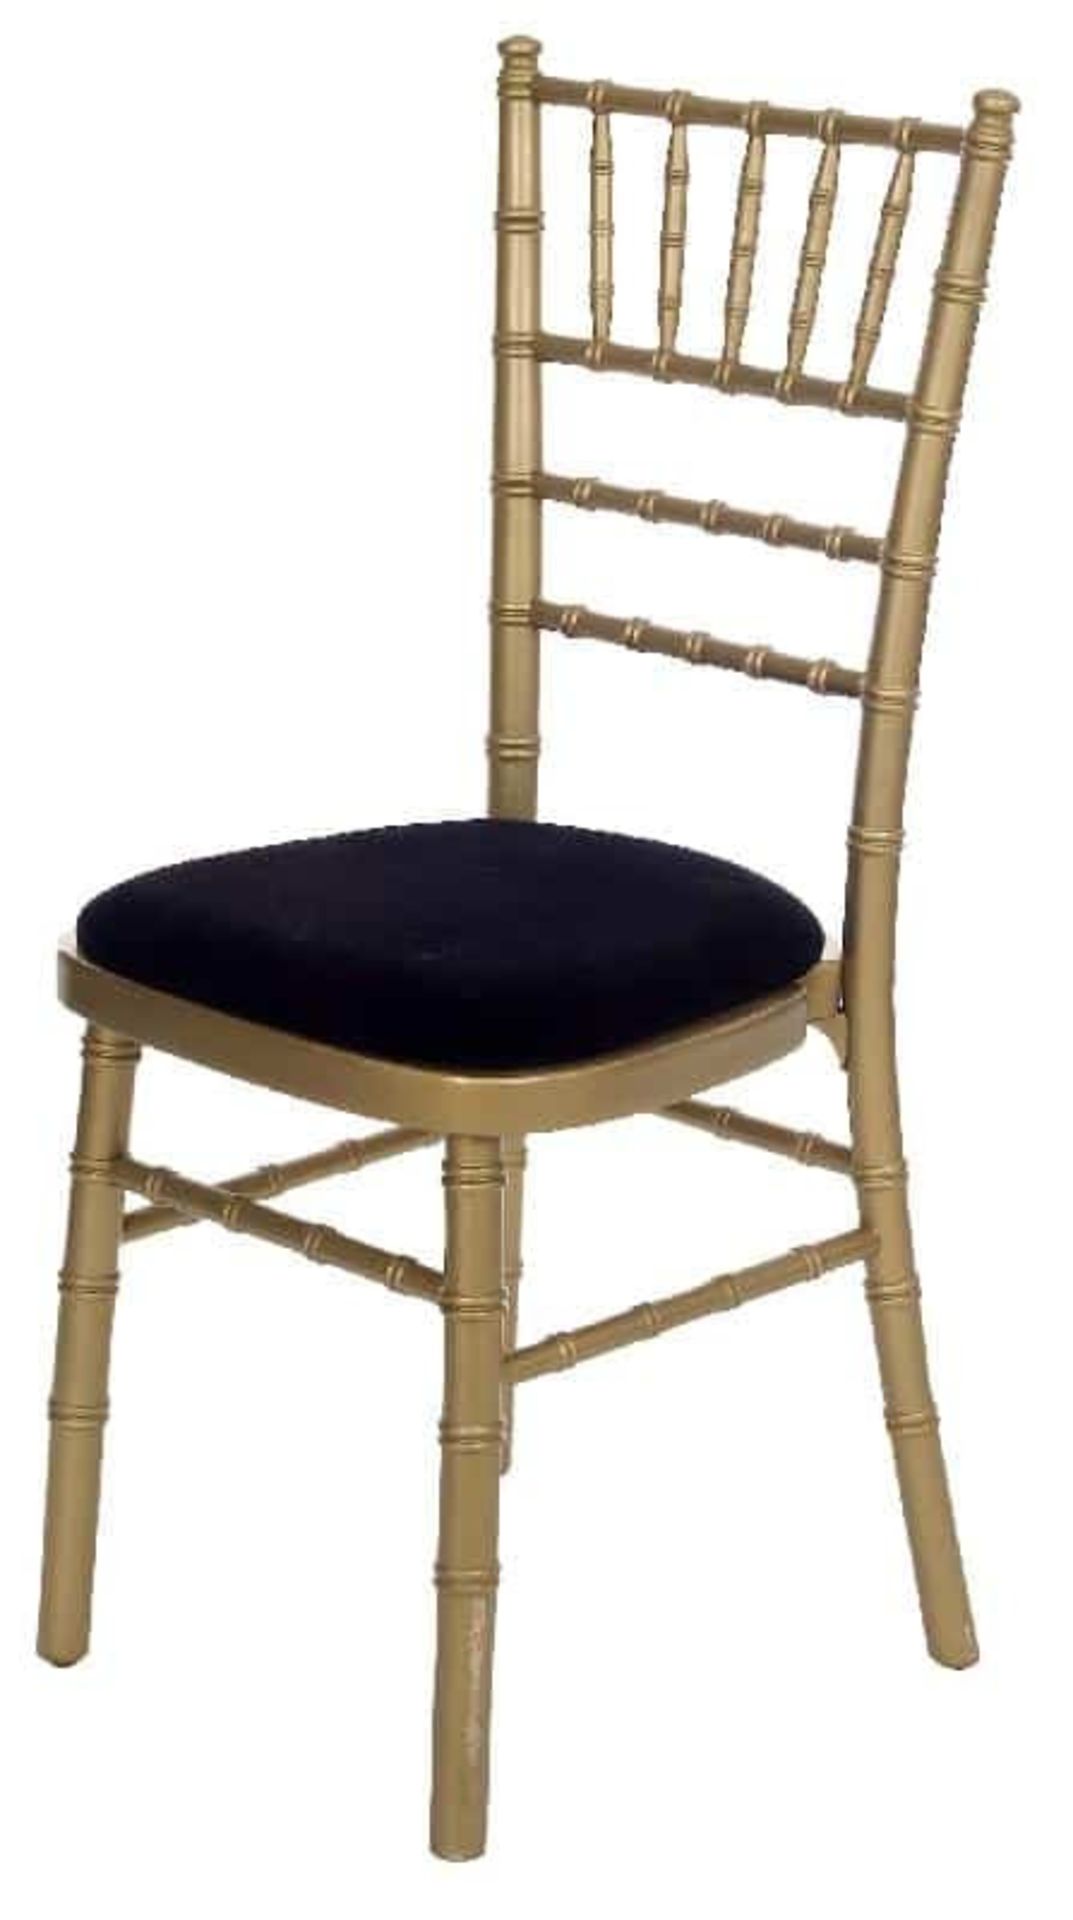 45 x Gold Chivari Chair European Beech Wood